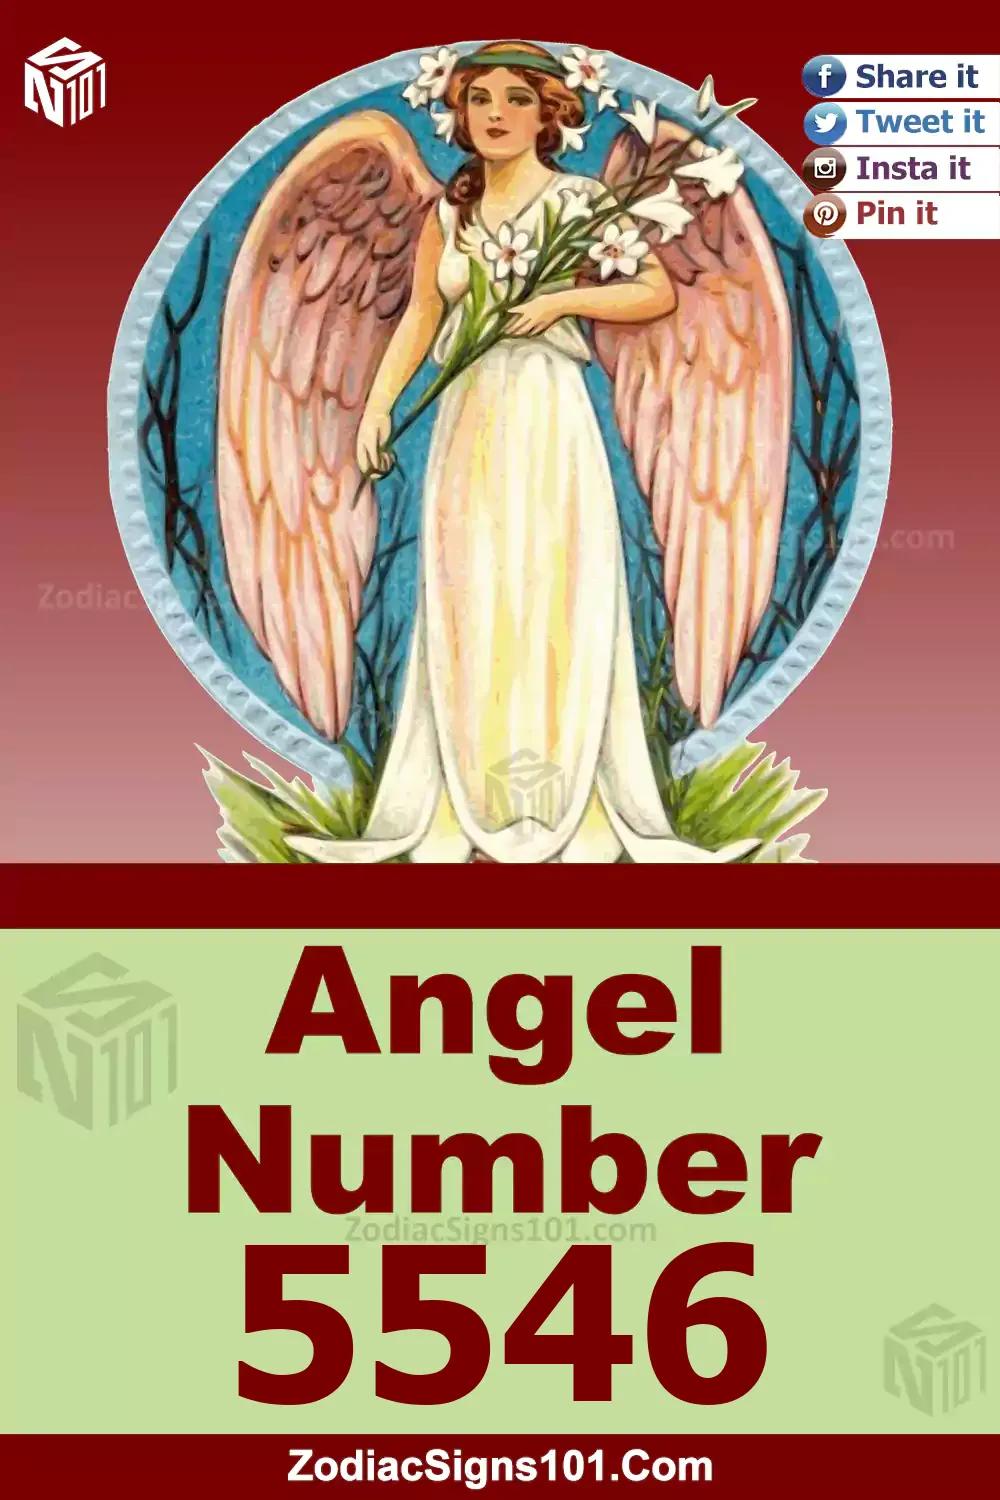 5546-Angel-Number-Meaning.jpg